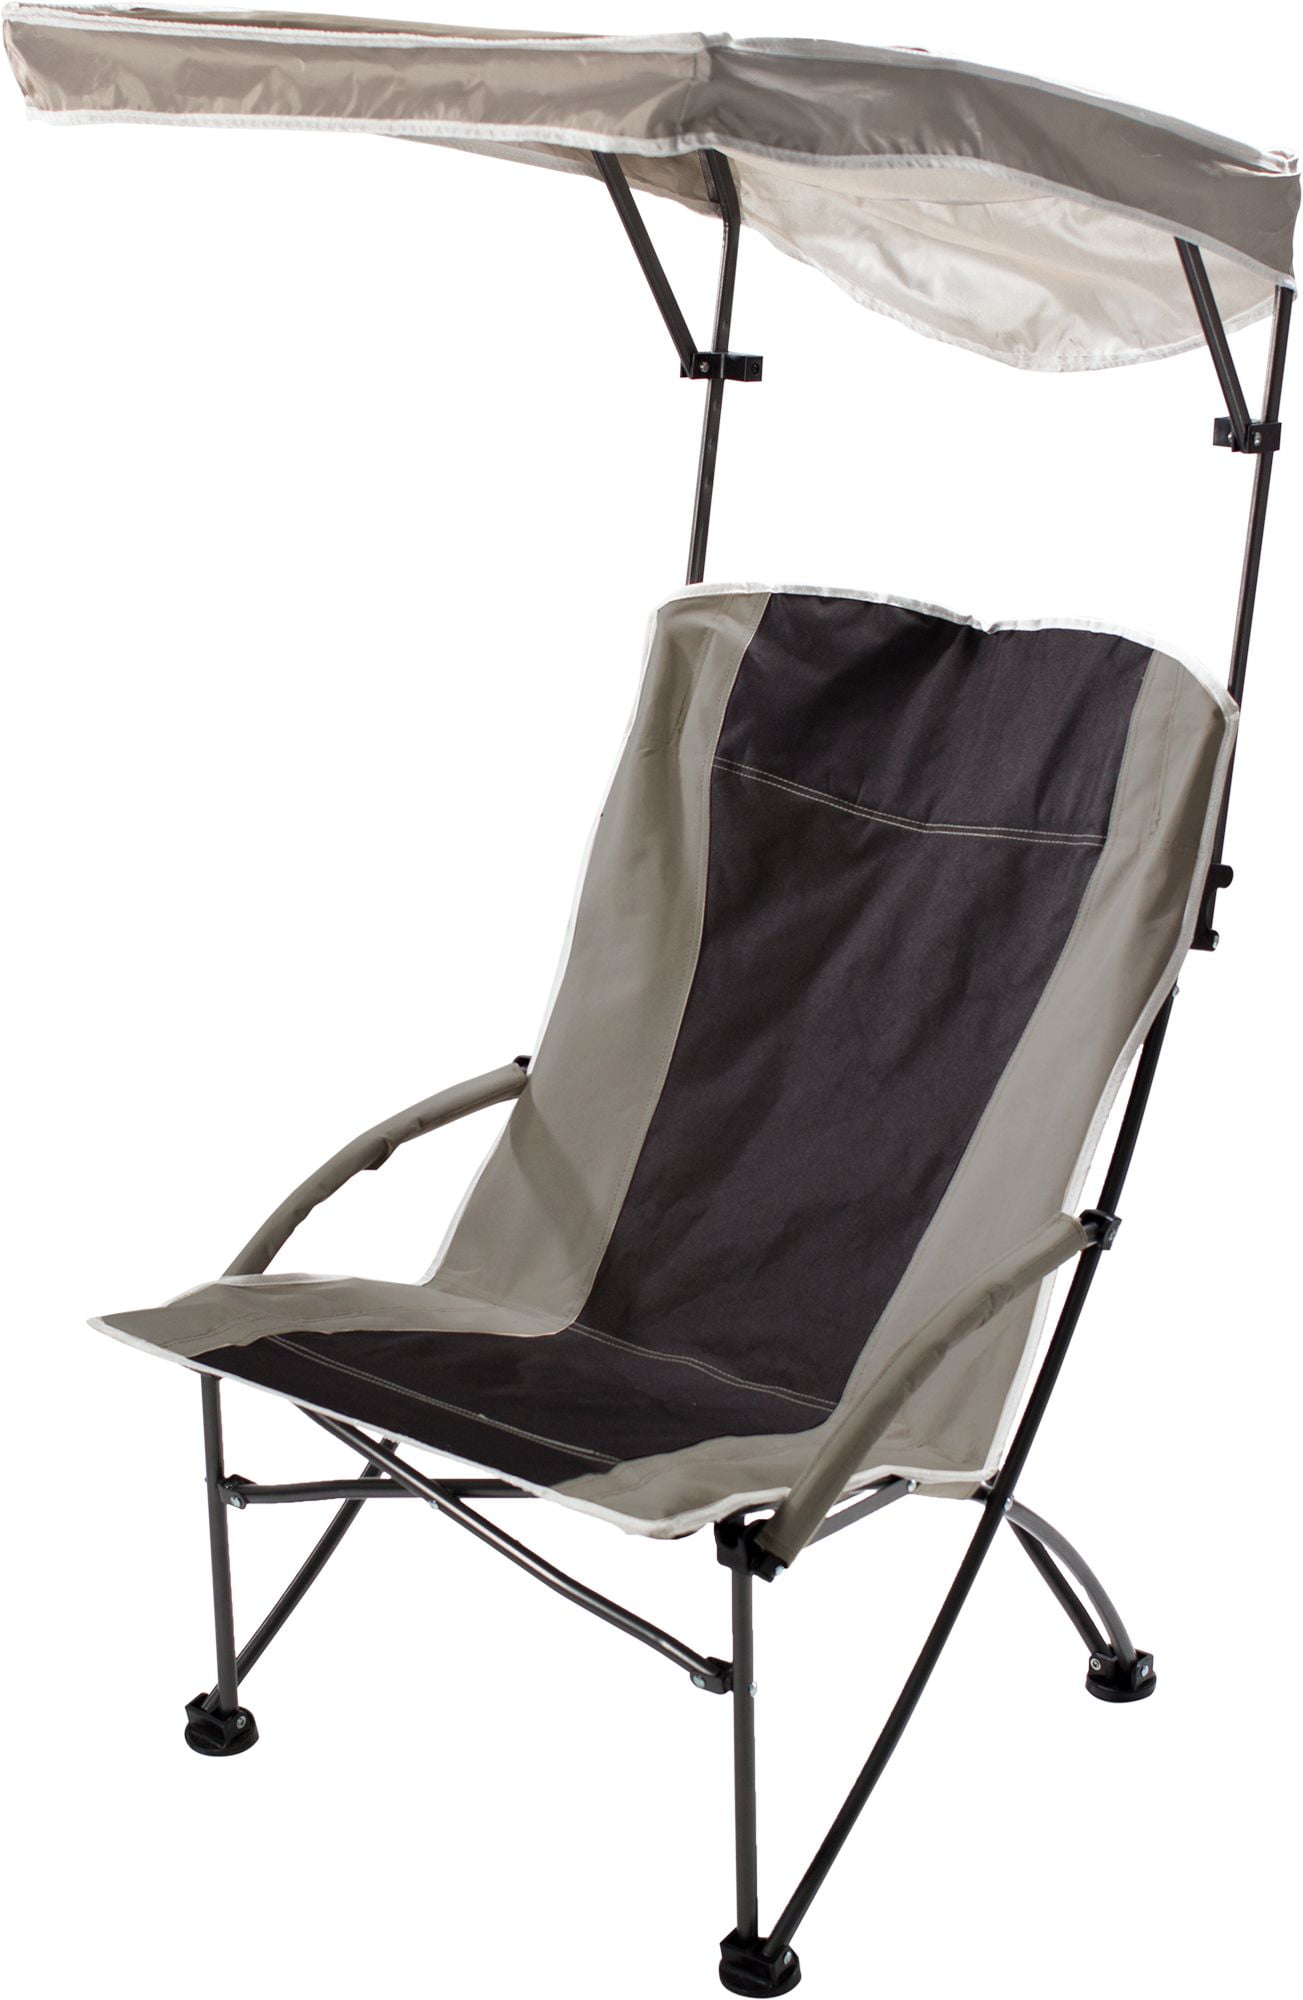 Quik Chair Camping Chair, Red - Walmart.com